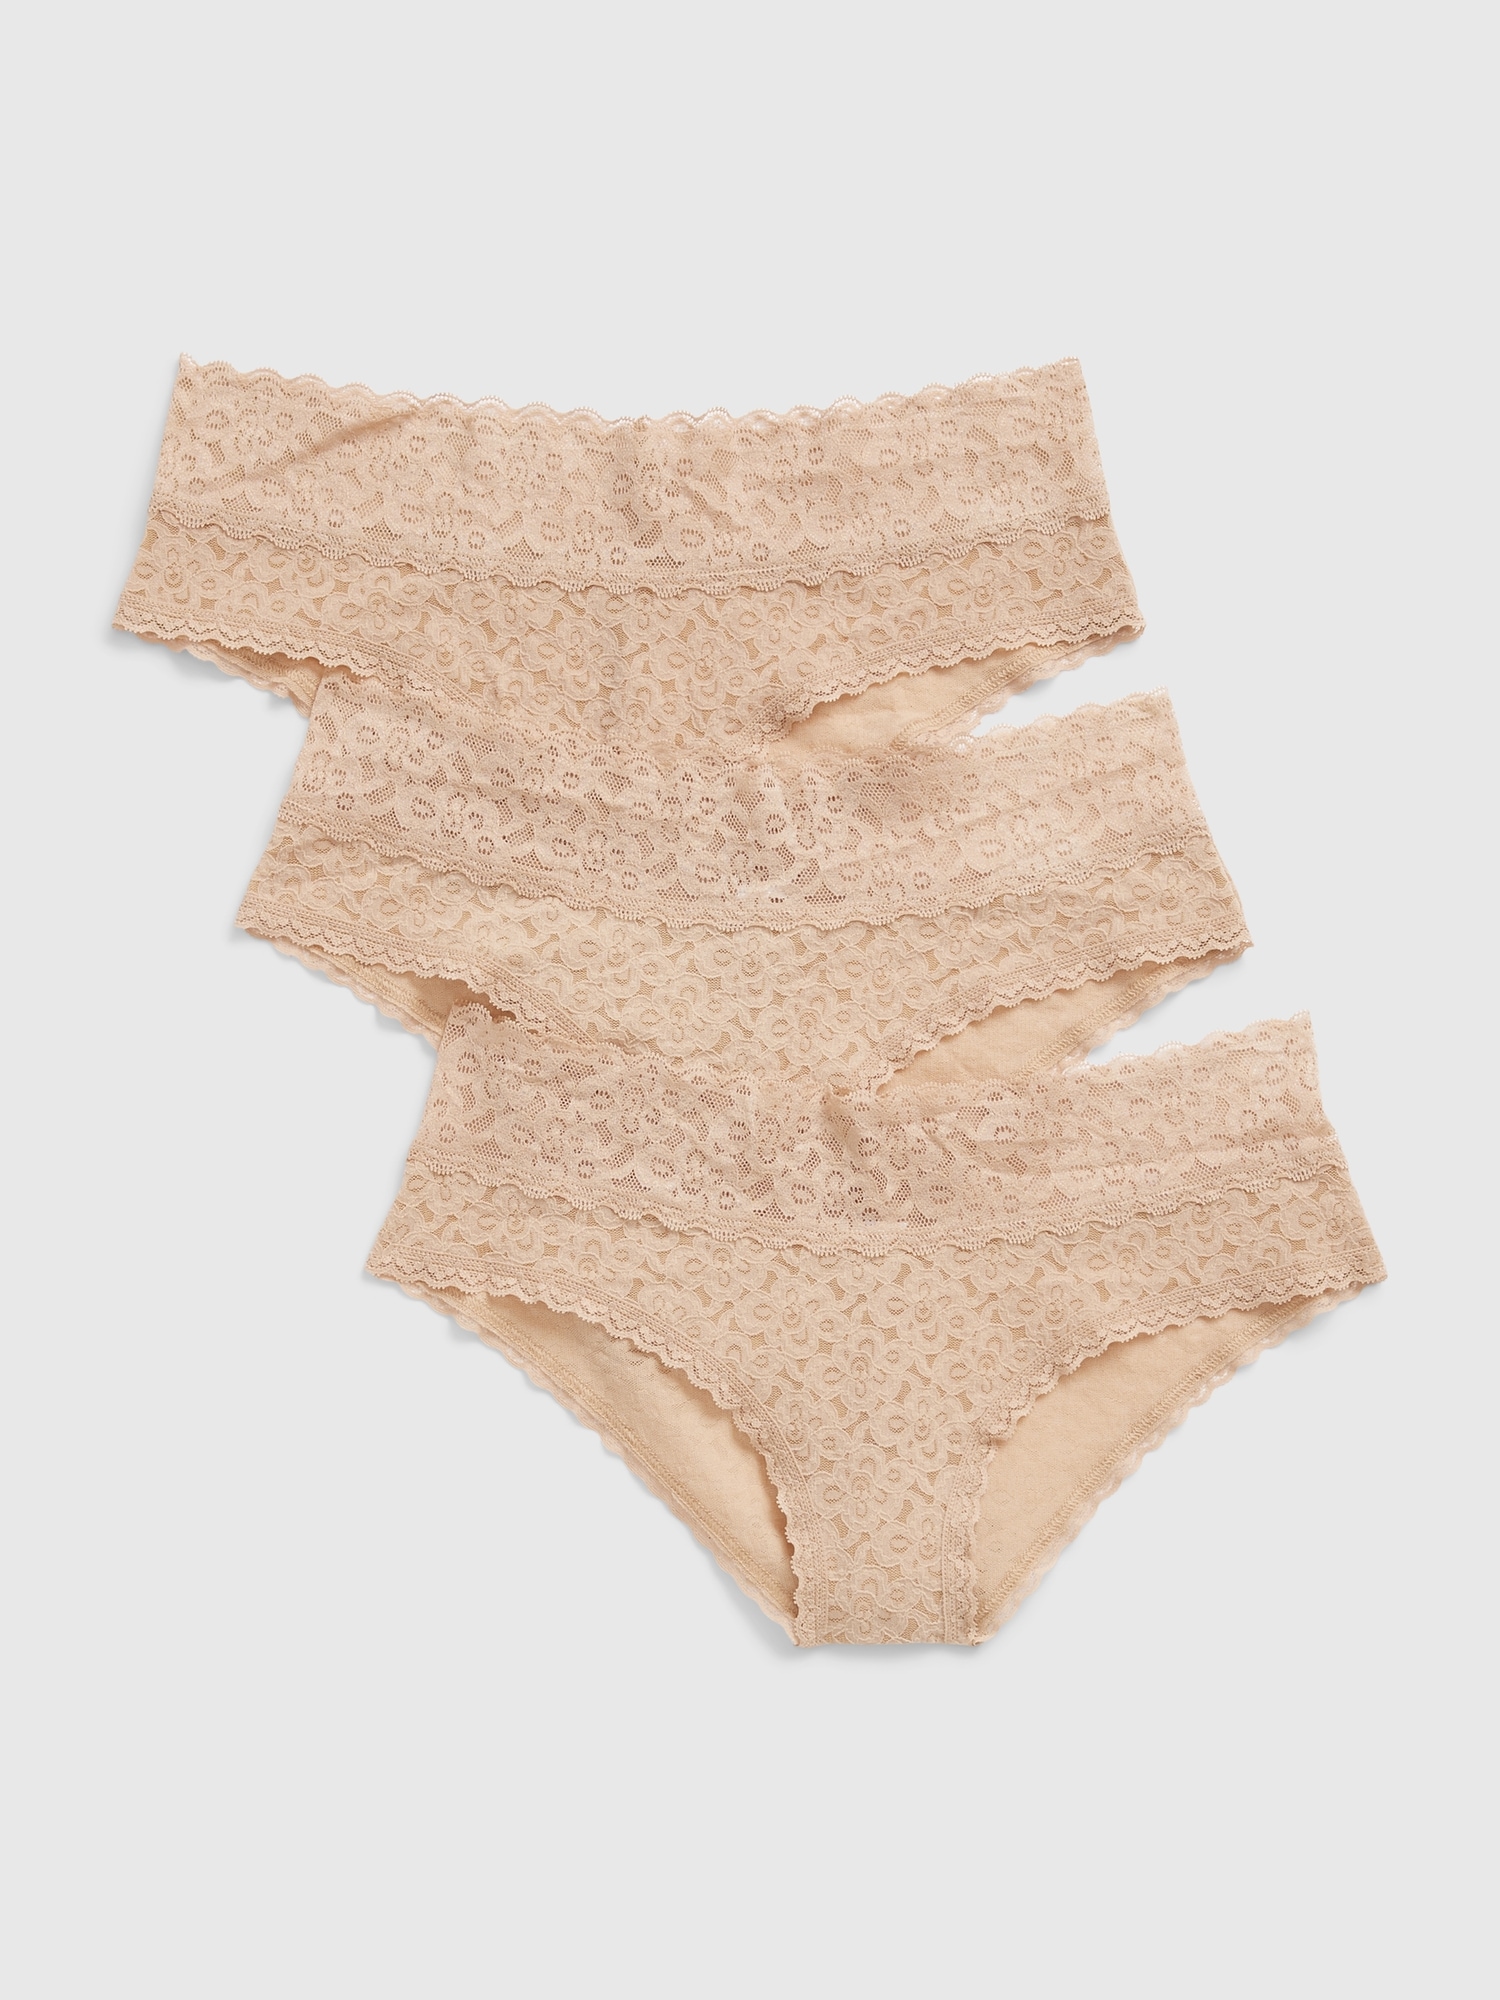 Lebowksi's Postdated Check  Novelty Women's Underwear –